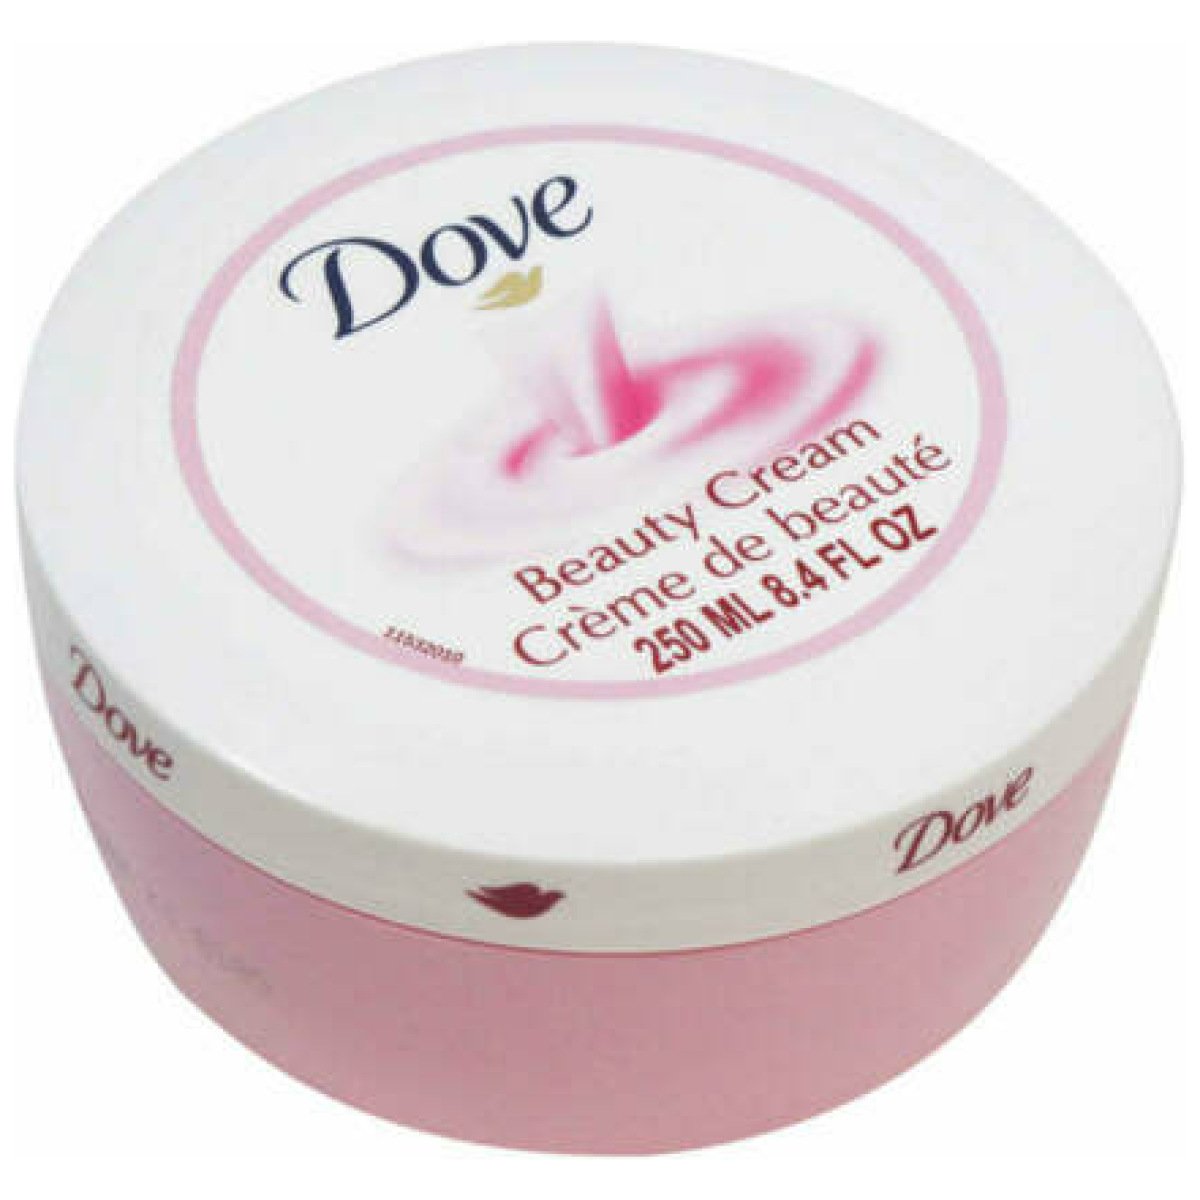 Dove Beauty Cream For Women 250 ml